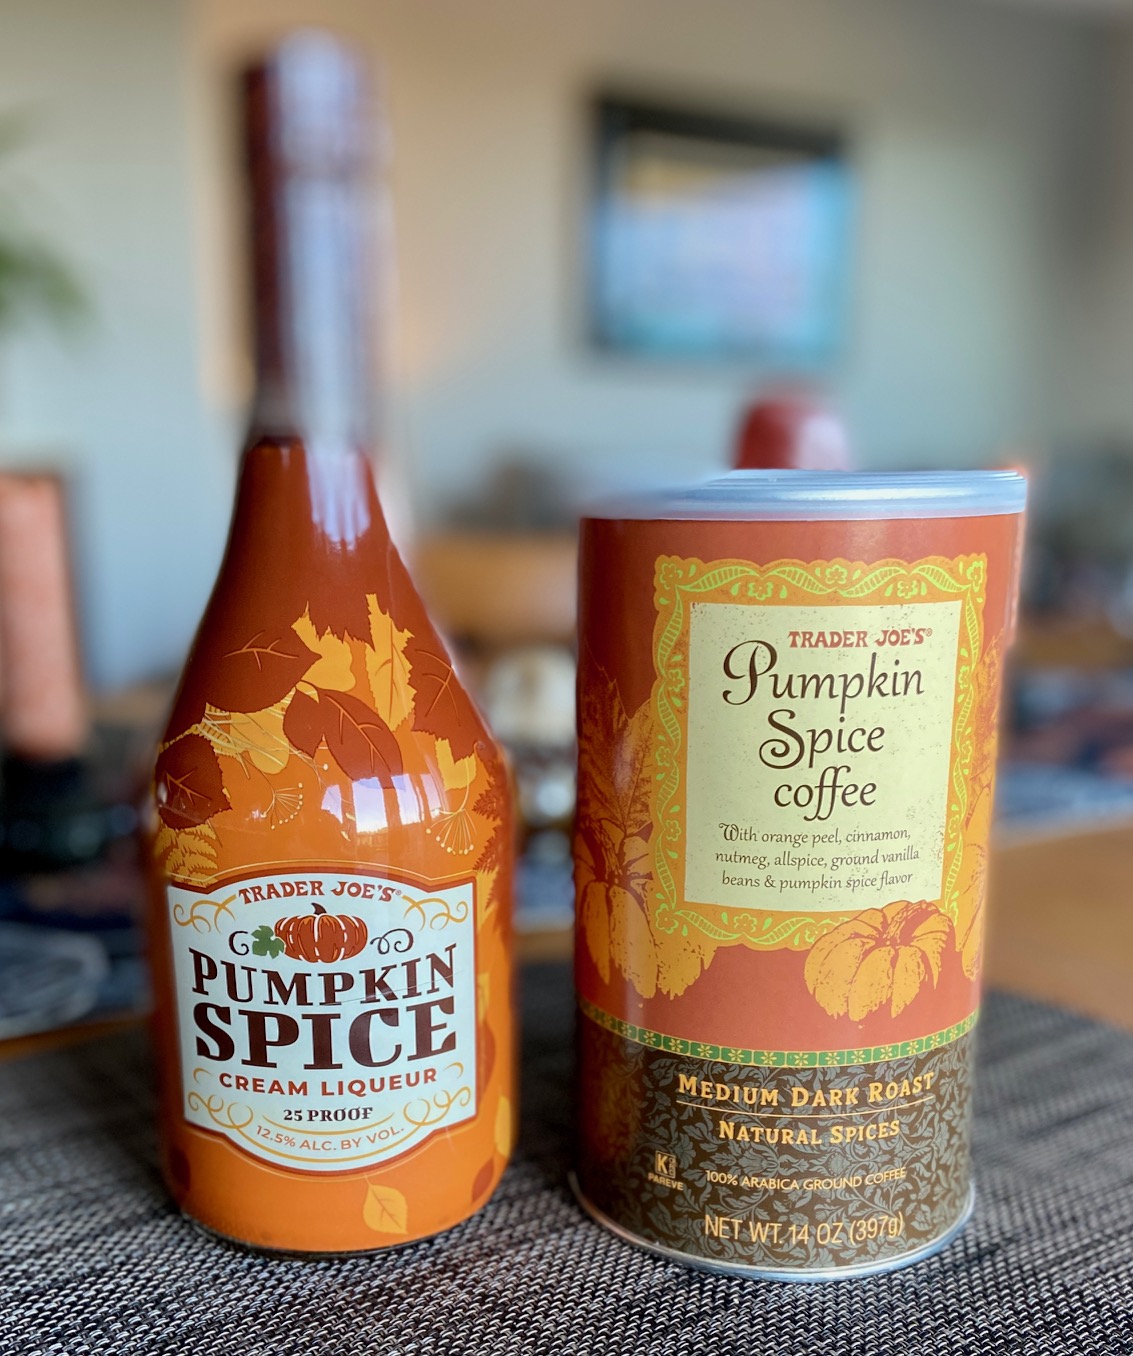 Trader Joe's Pumpkin Spice Coffee and Liqueur